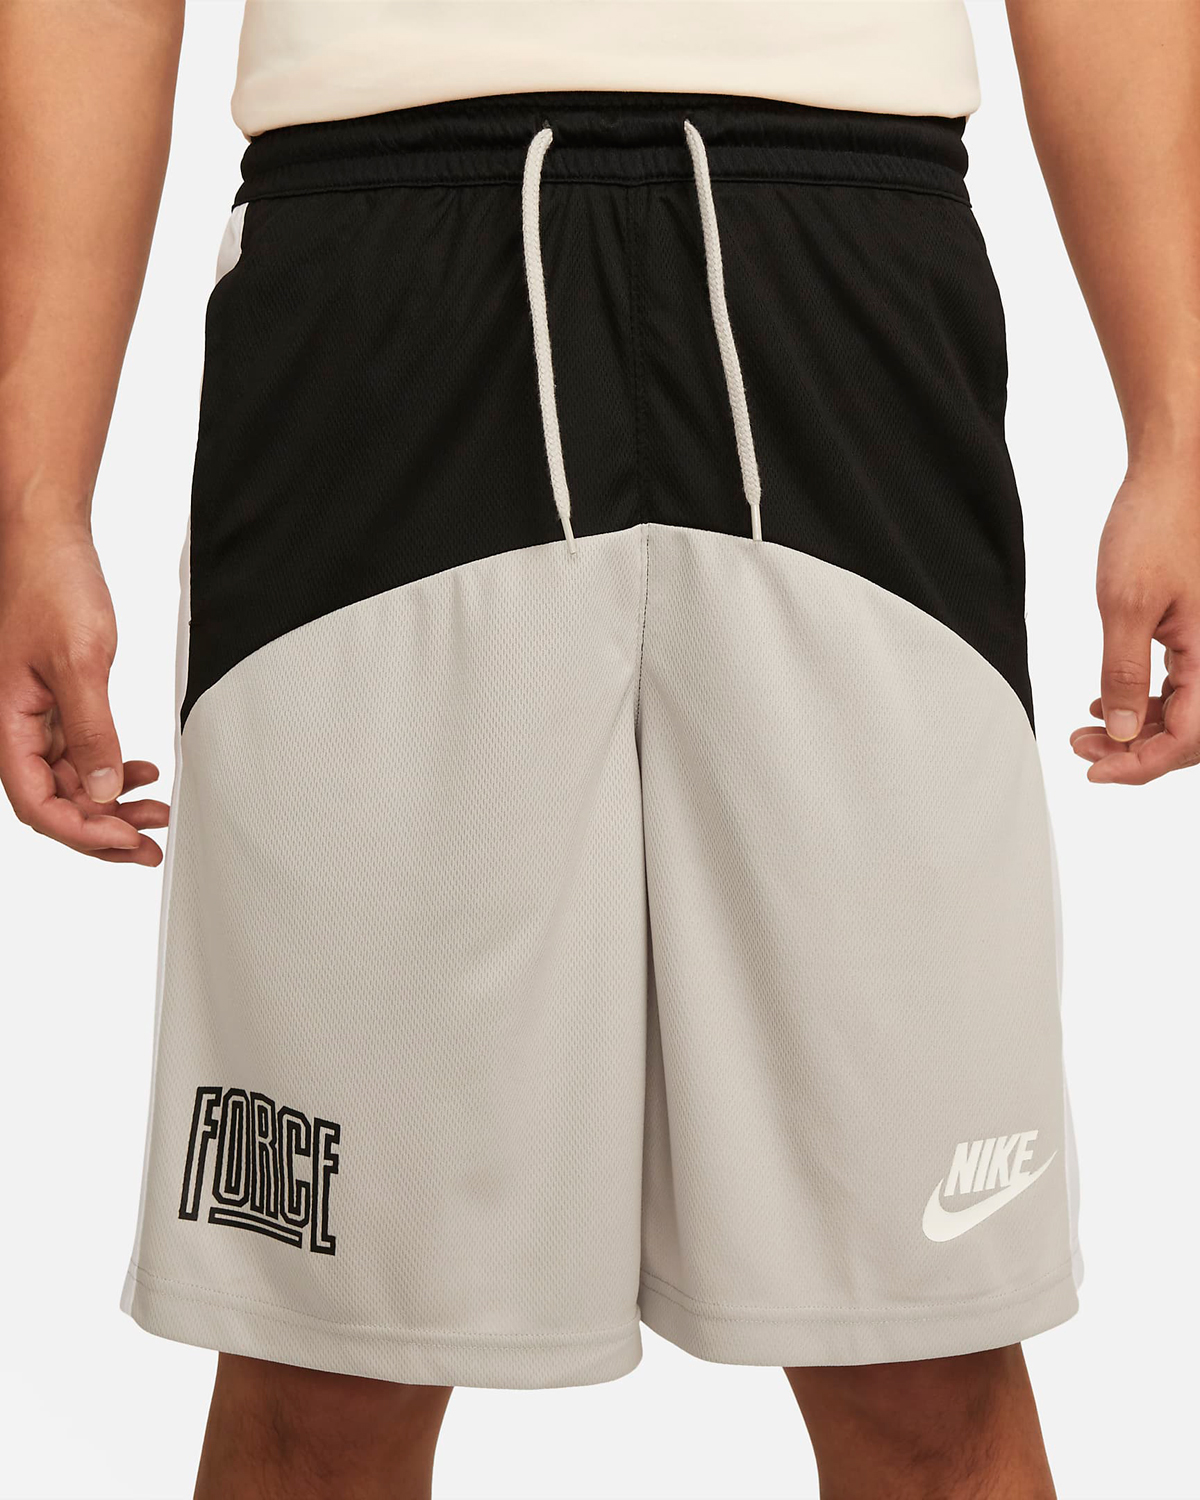 Nike-Starting-5-Basketball-Shorts-Light-Iron-Ore-Black